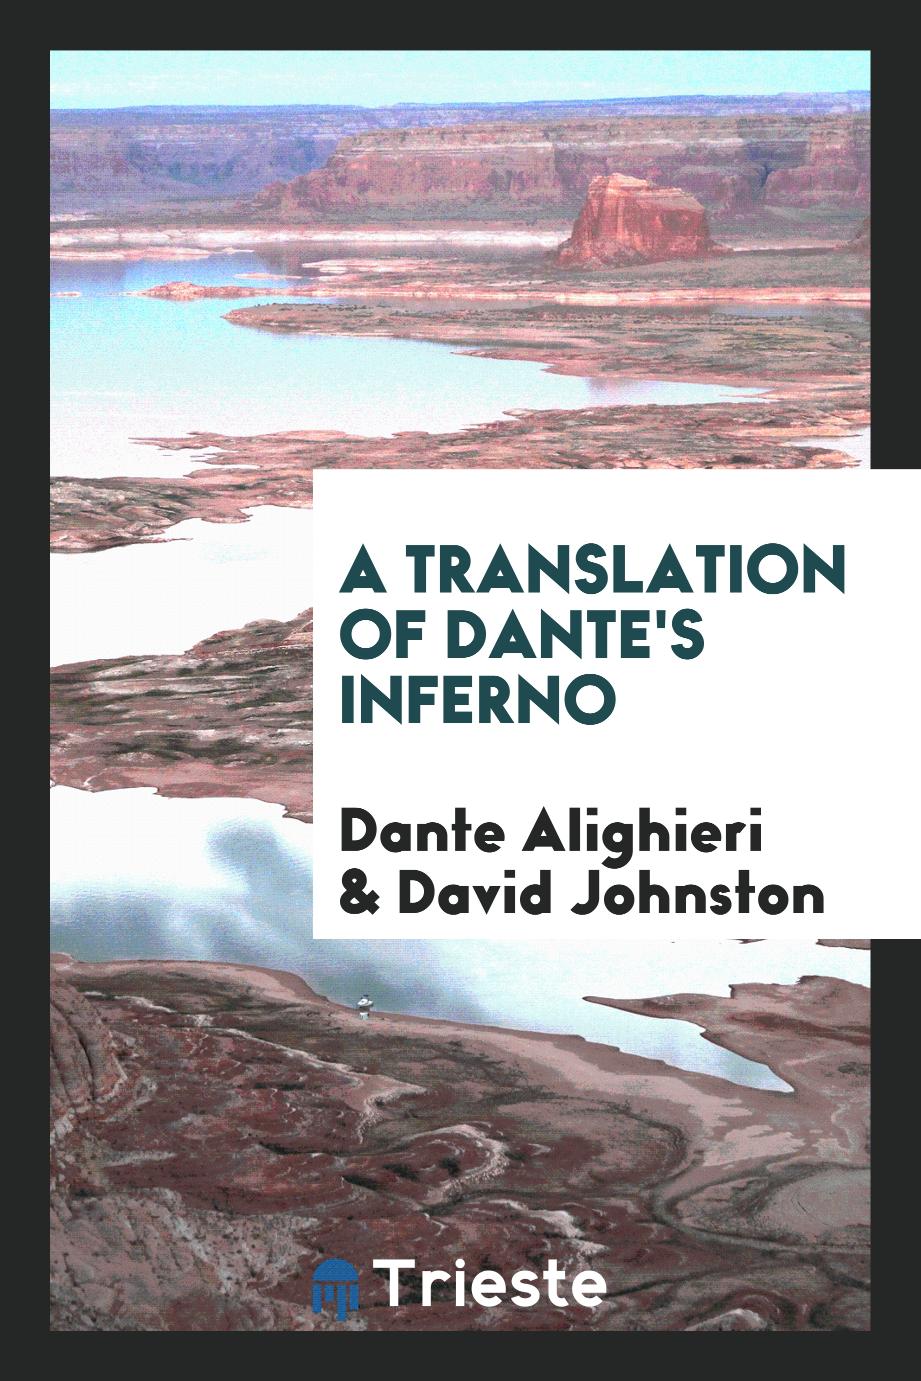 A Translation of Dante's Inferno